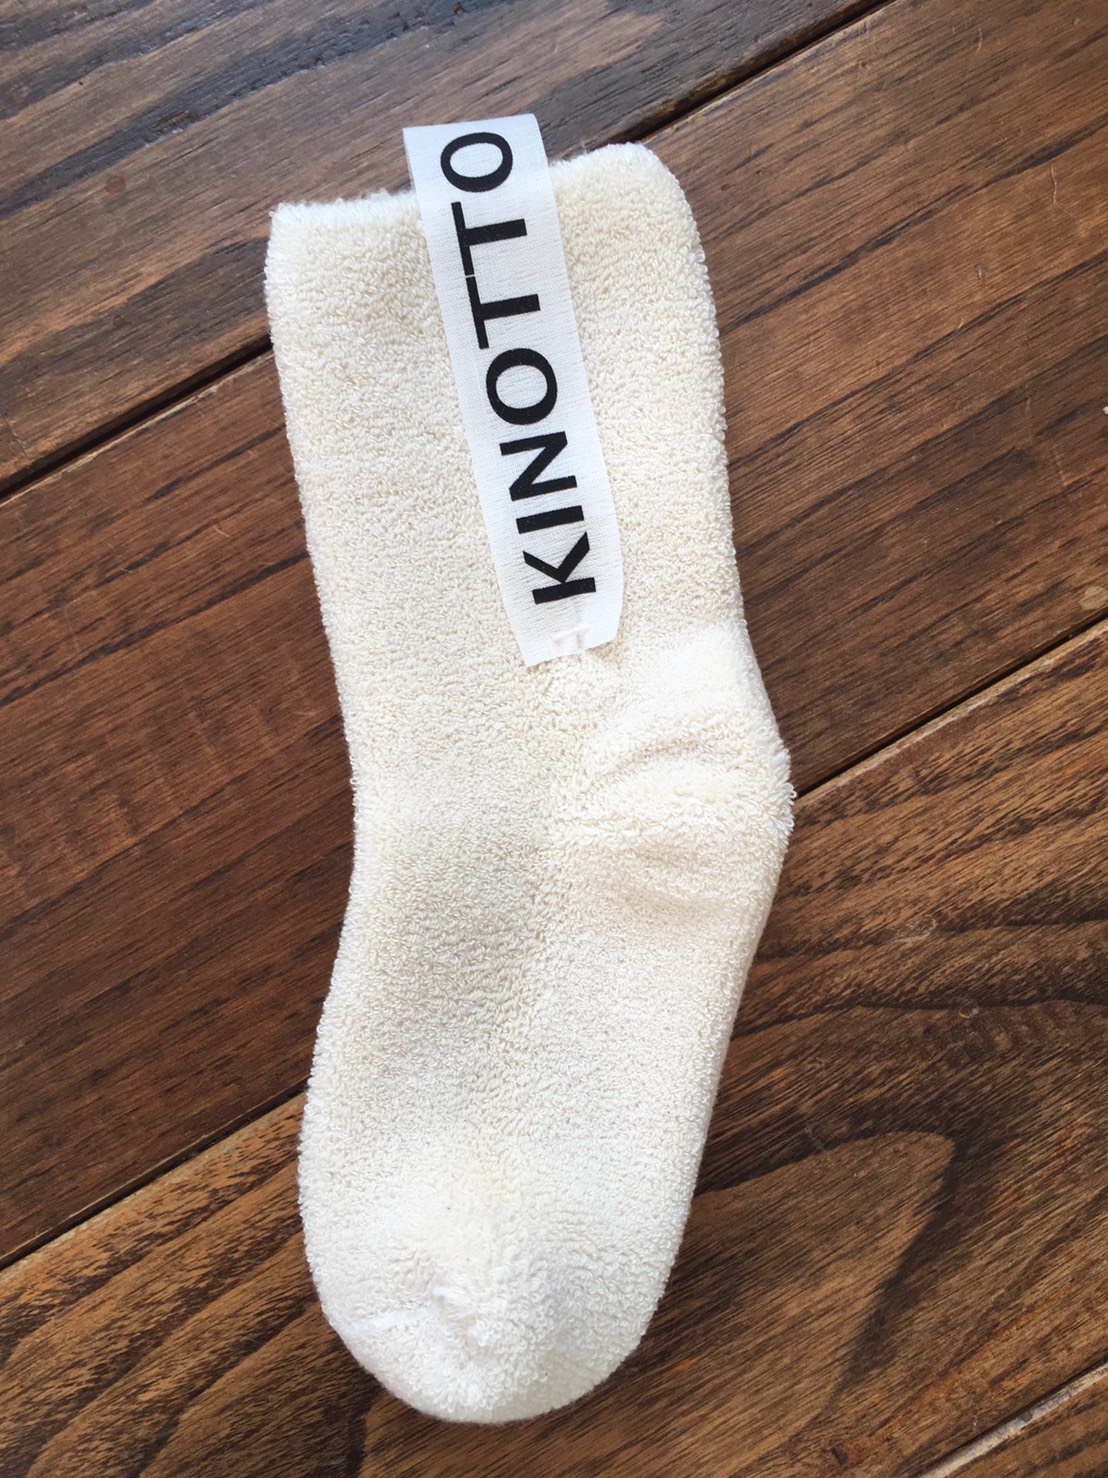 KINOTTO Reversible Socks (Men)